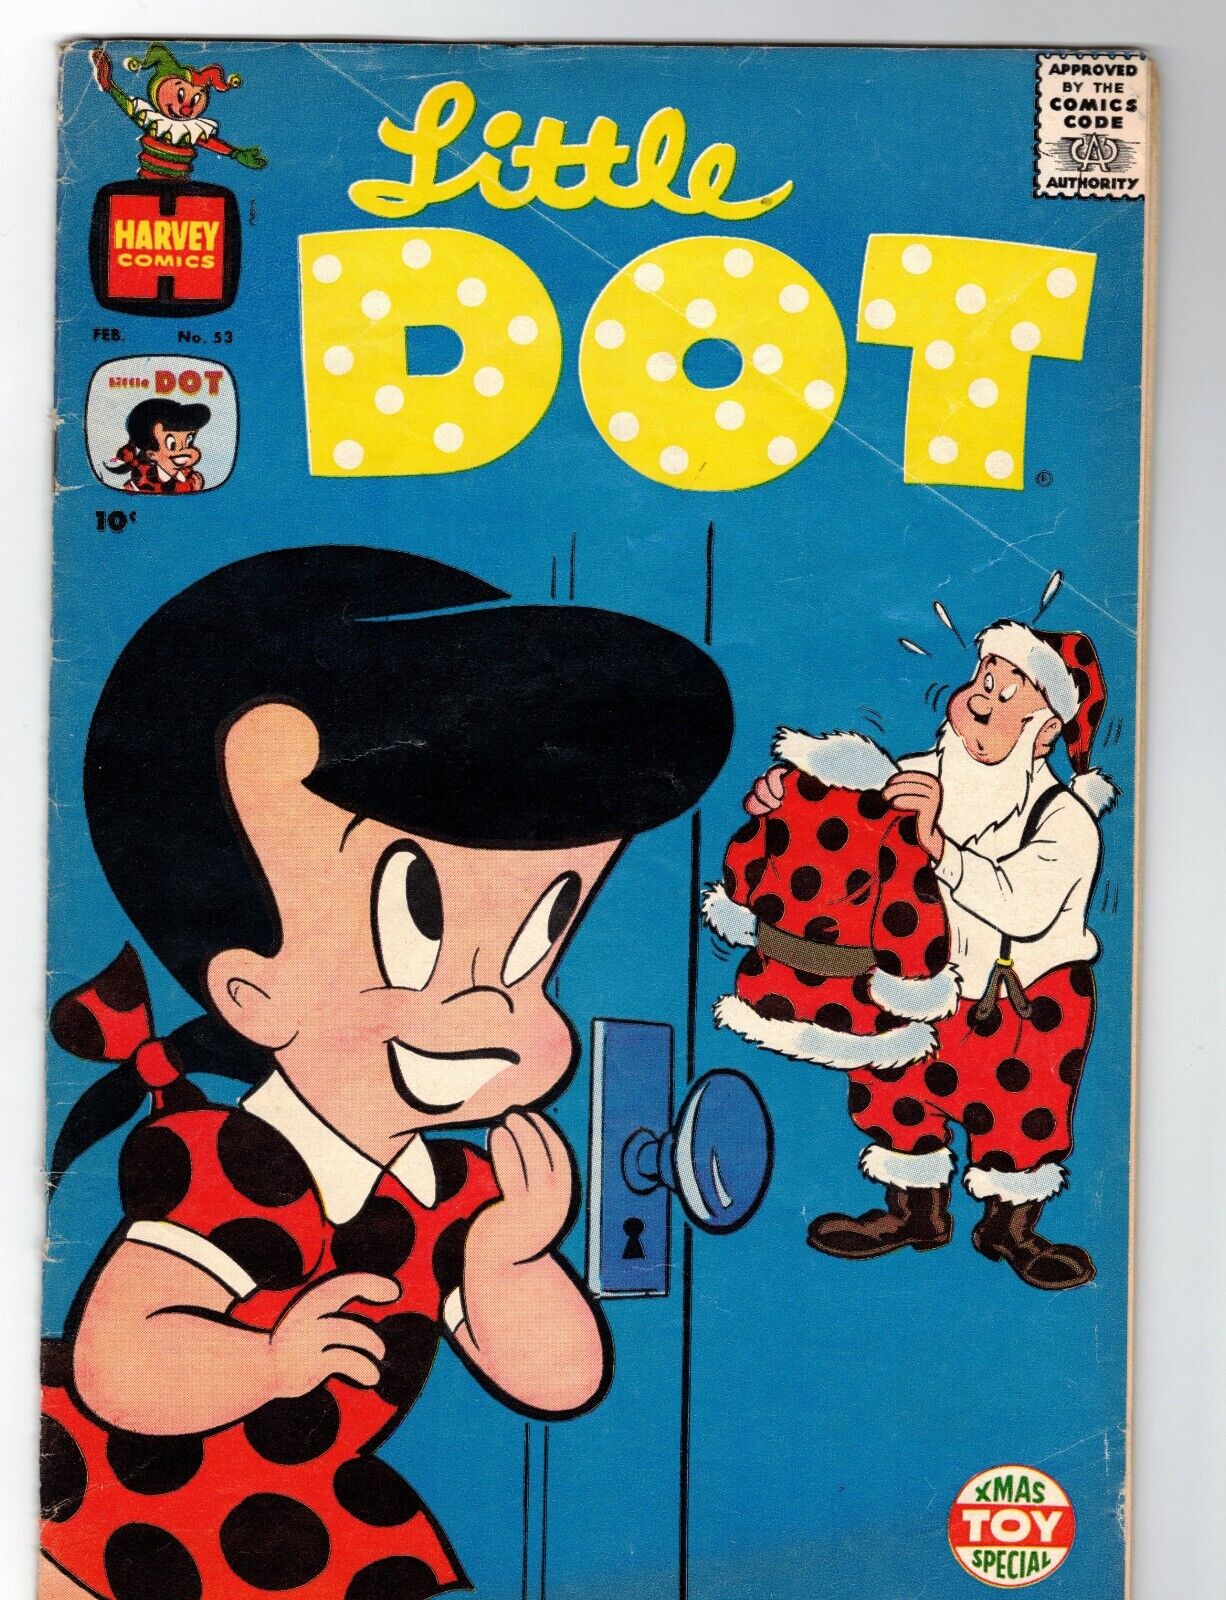 Little Dot #53 - February 1960 - Harvey Comics